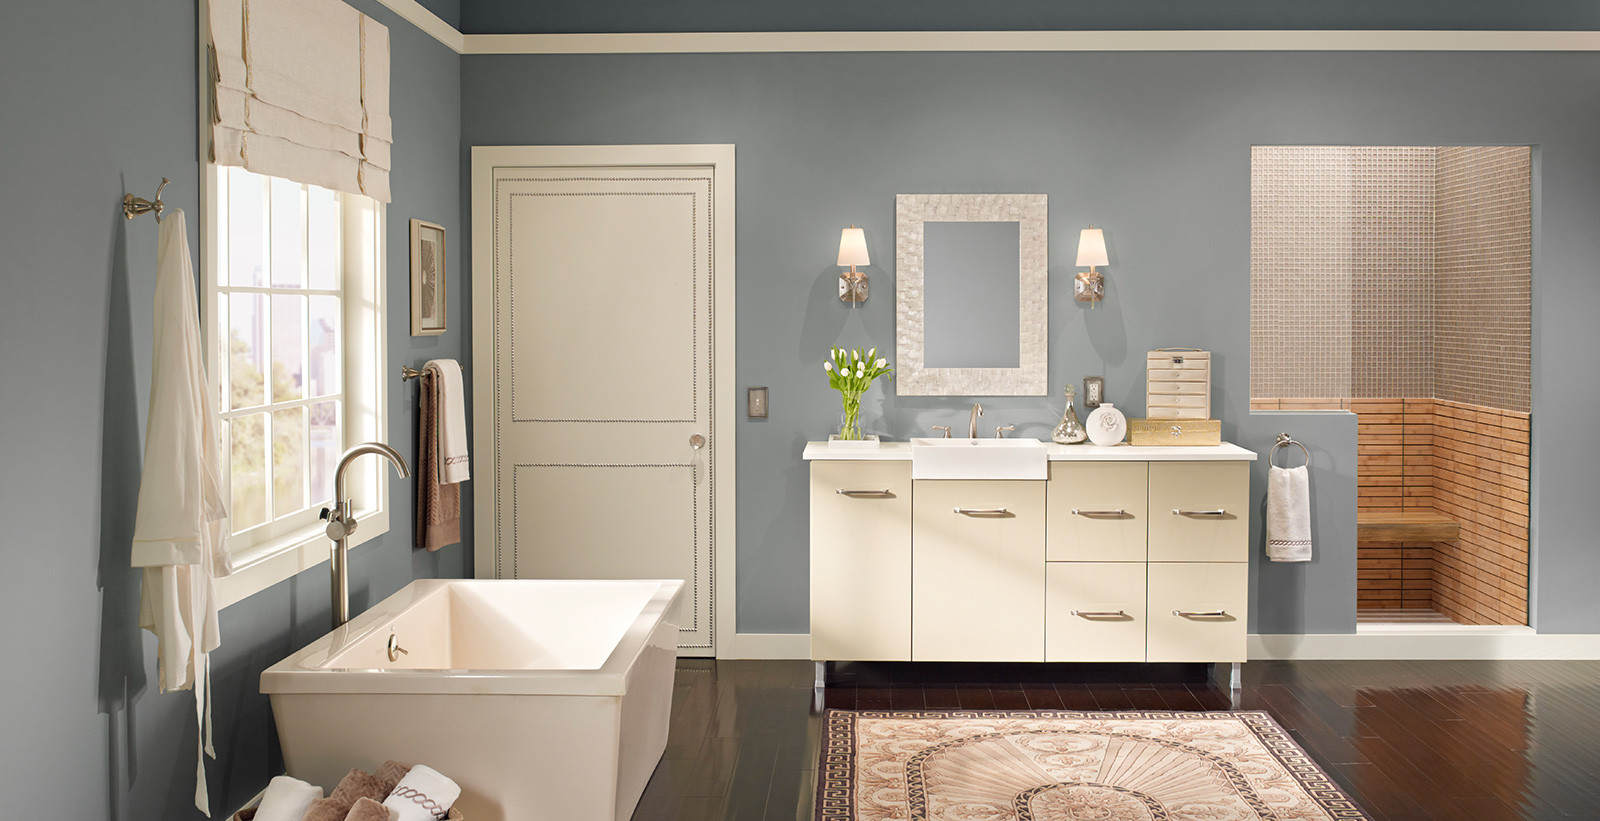 Bathroom Paint Colors Behr
 Calming Bathroom Ideas and Inspirational Paint Colors